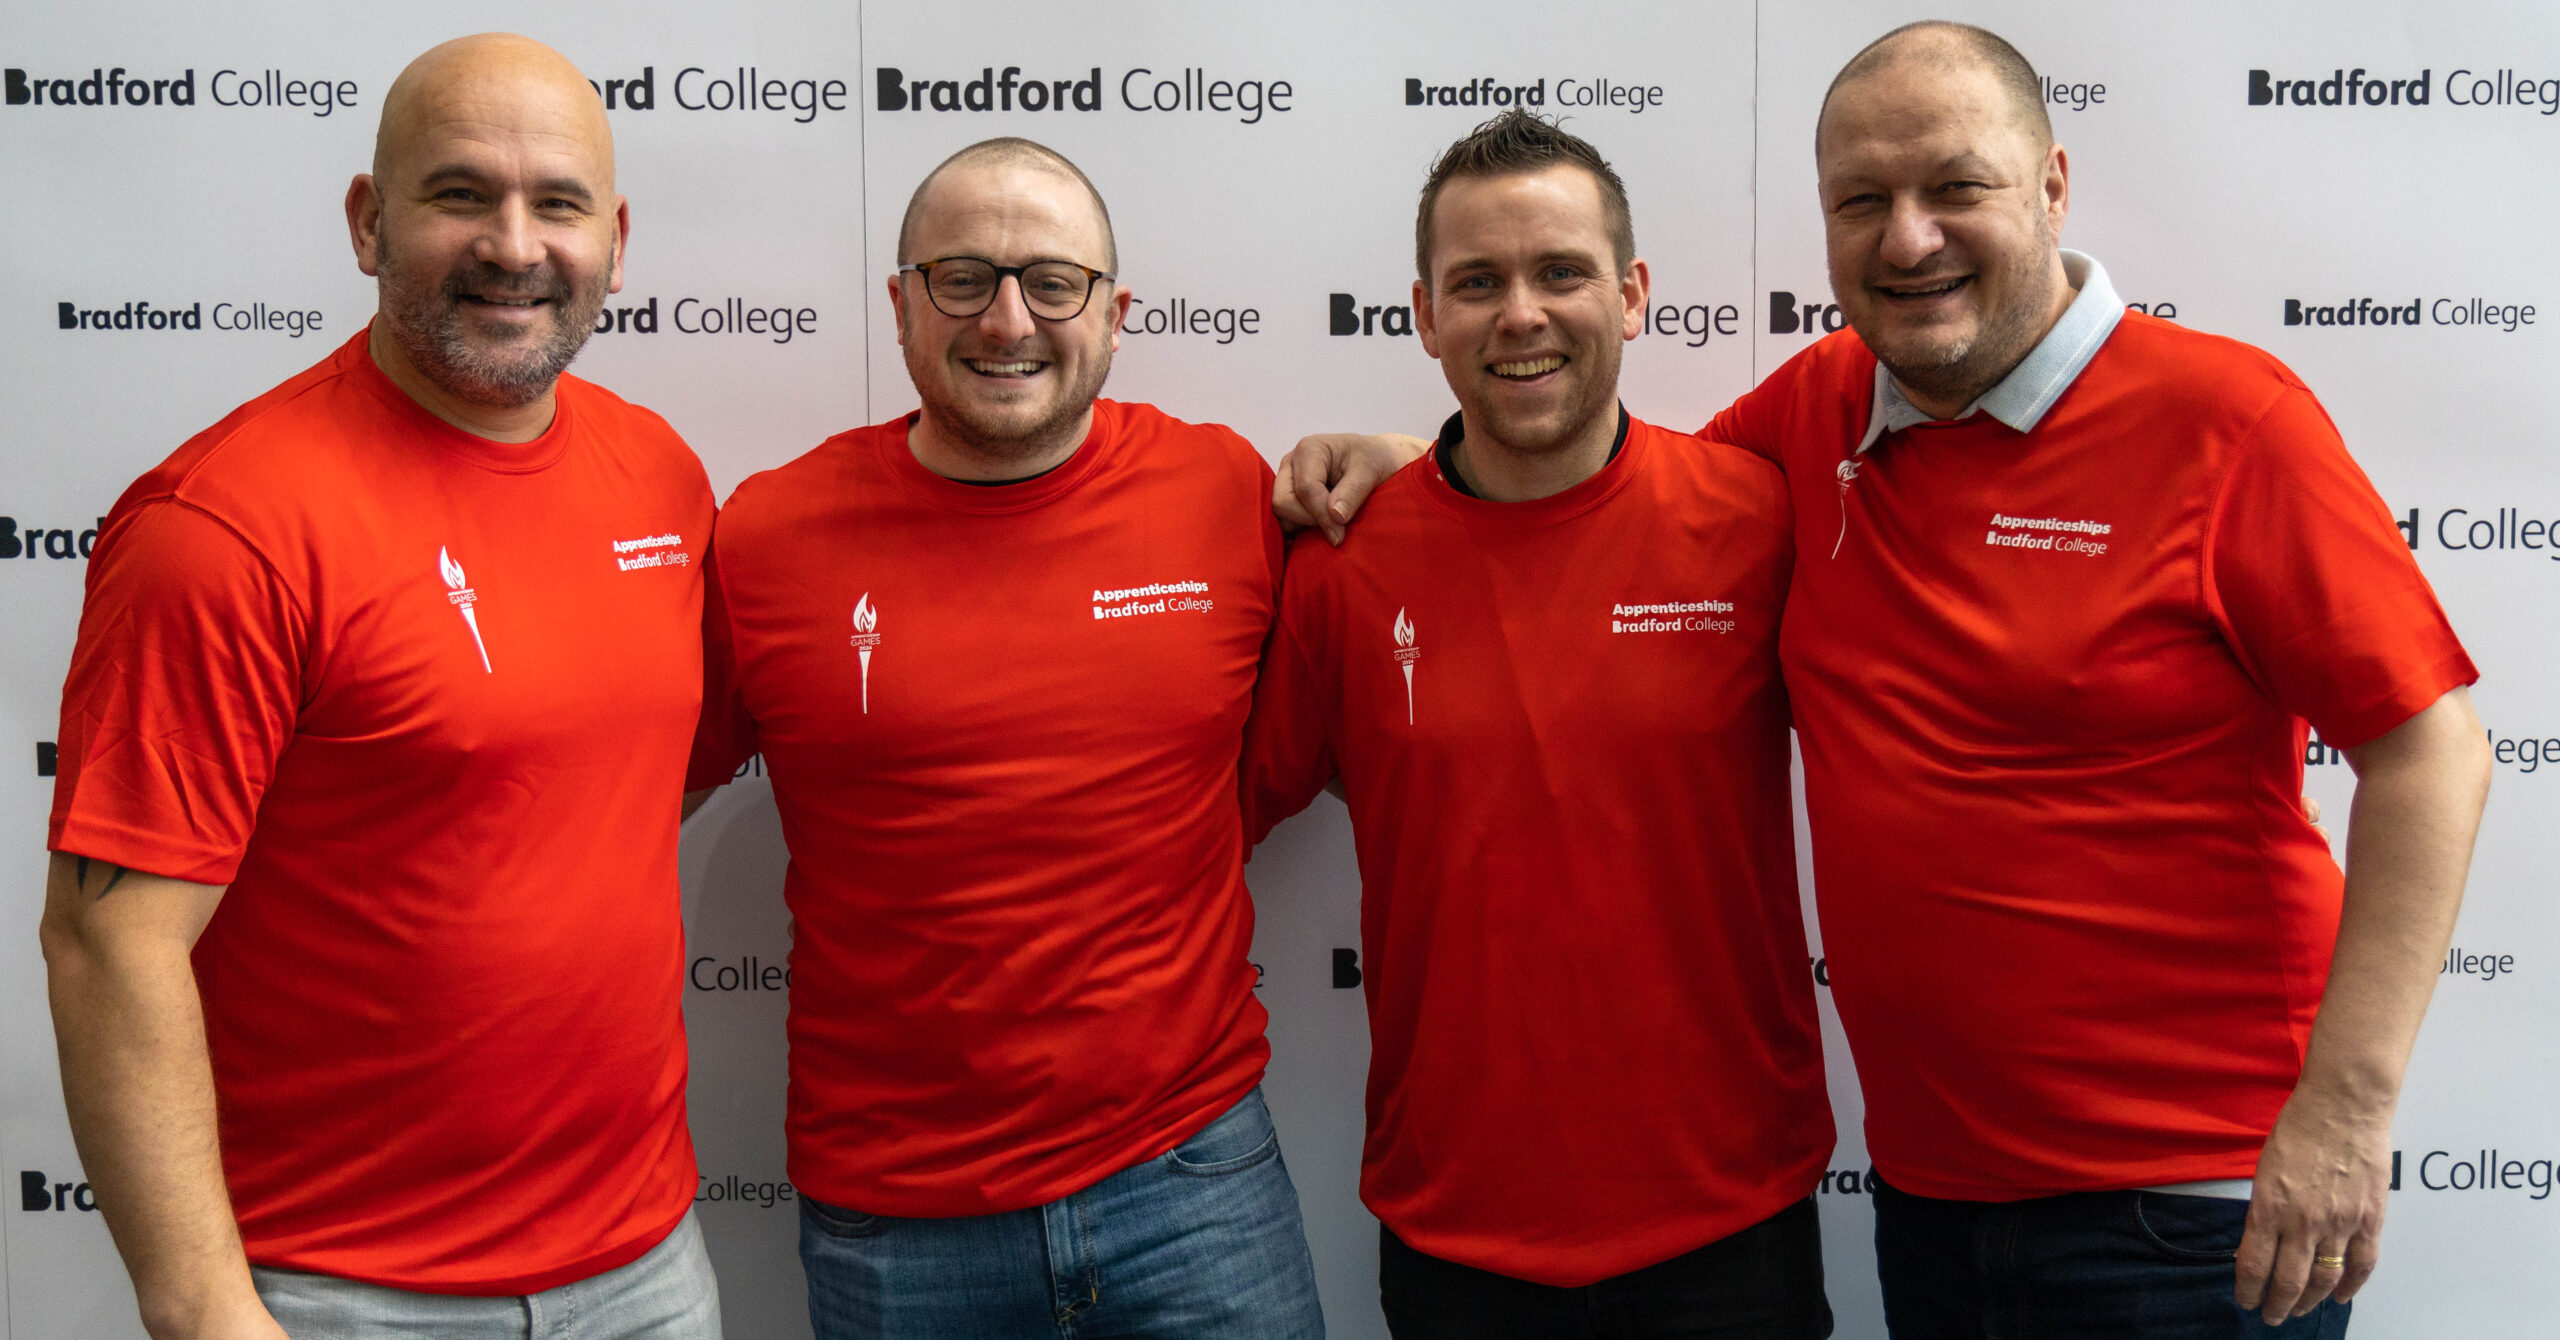 the bradford city team at the apprenticeship games